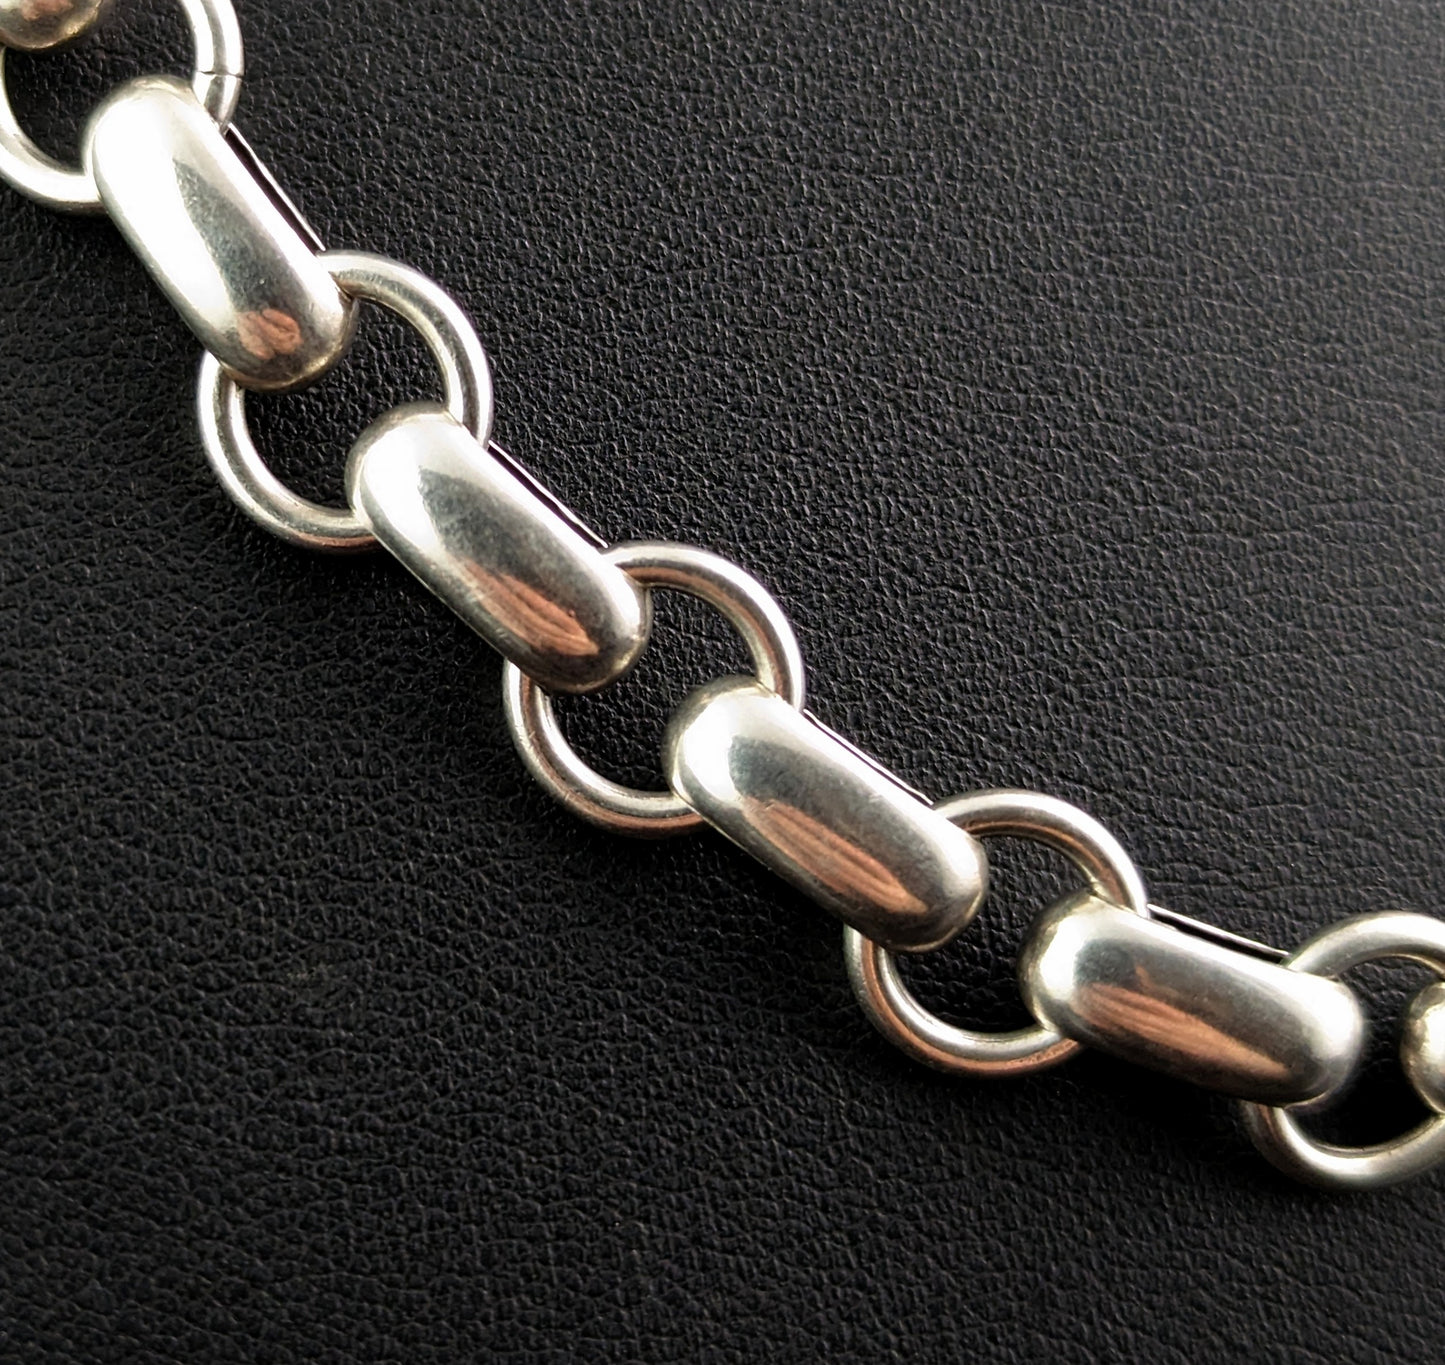 Antique silver book chain collar necklace, Victorian